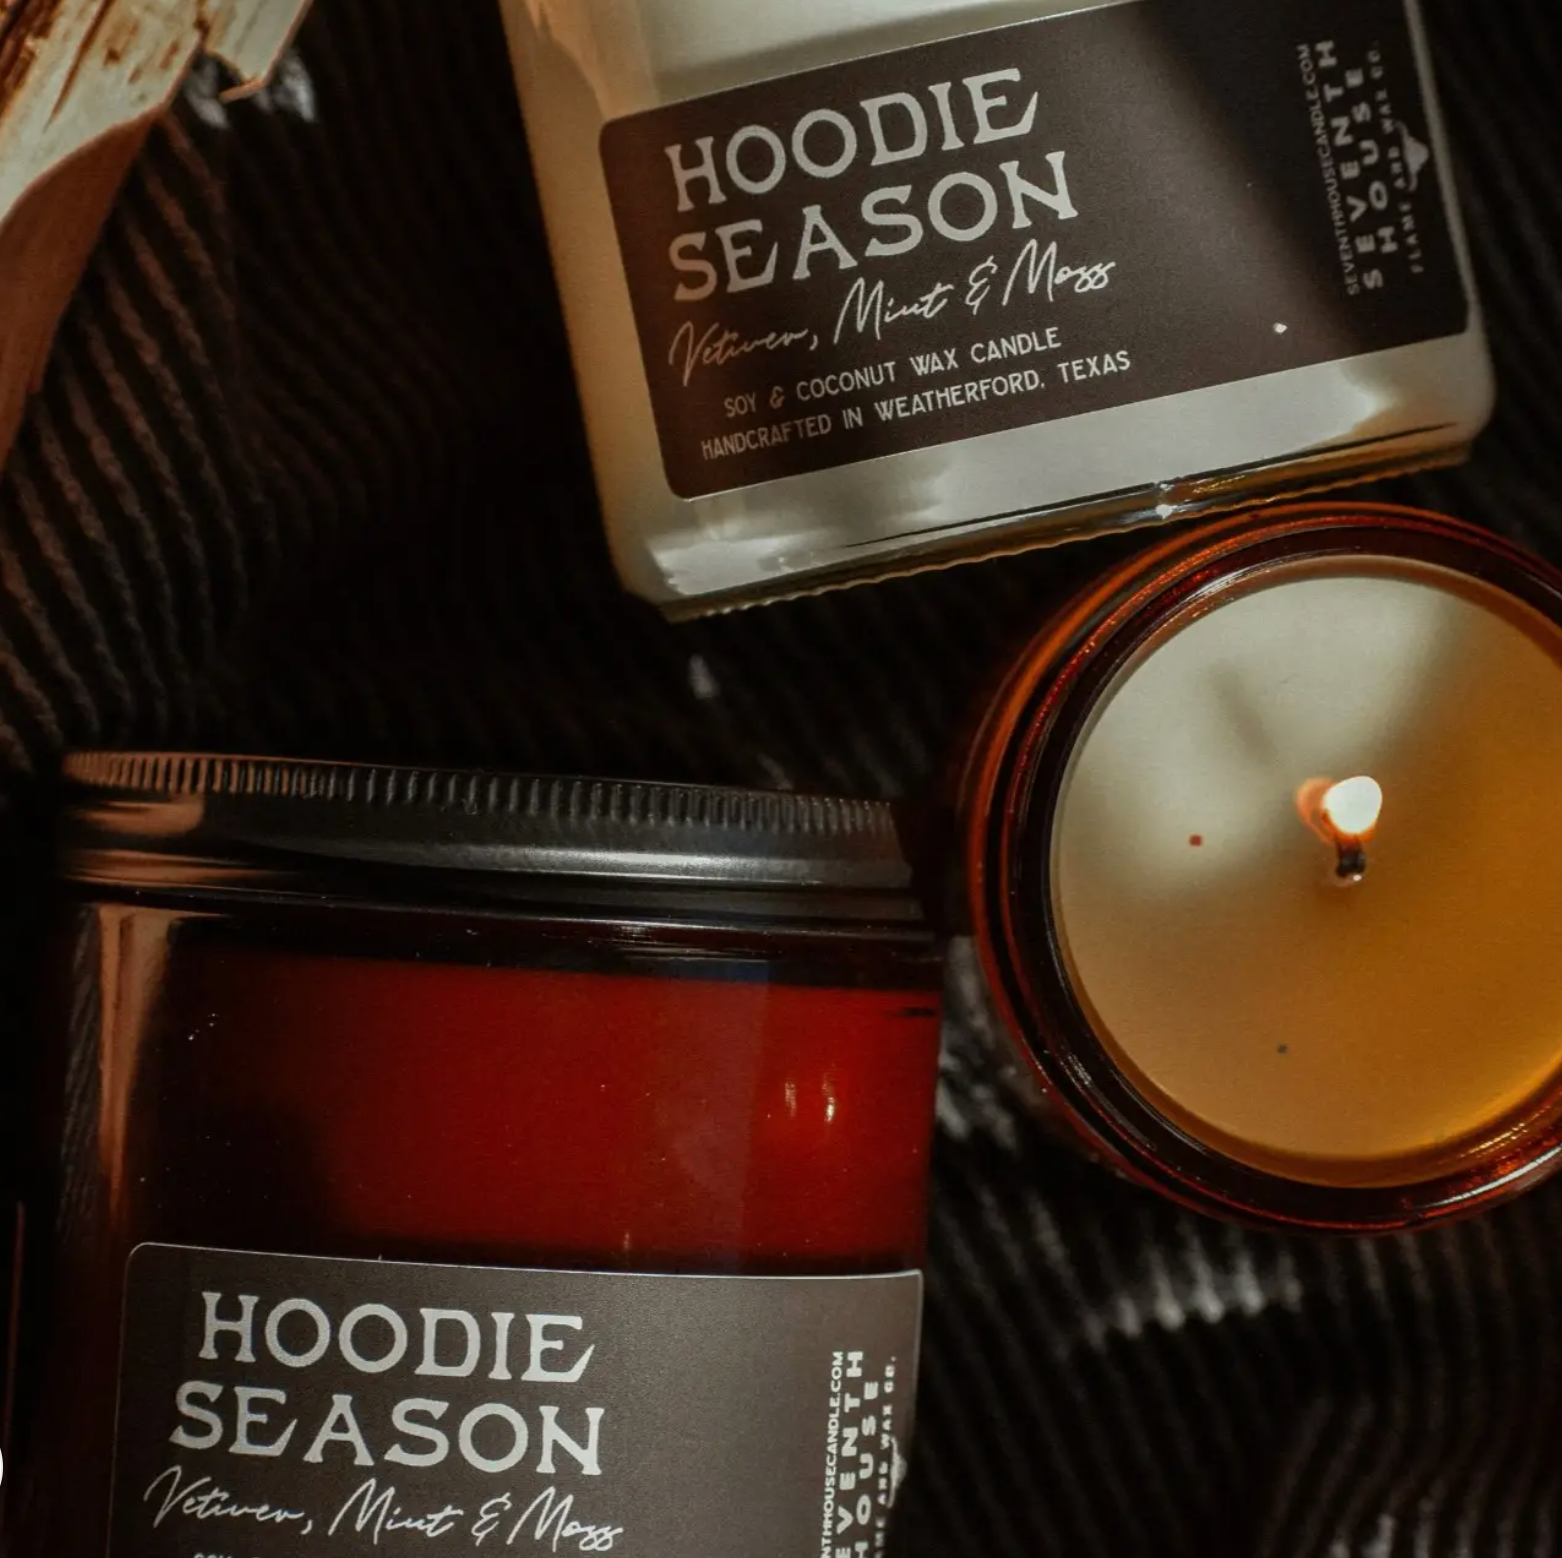 Hoodie Season - Vetiver, Mint, & Moss Candle